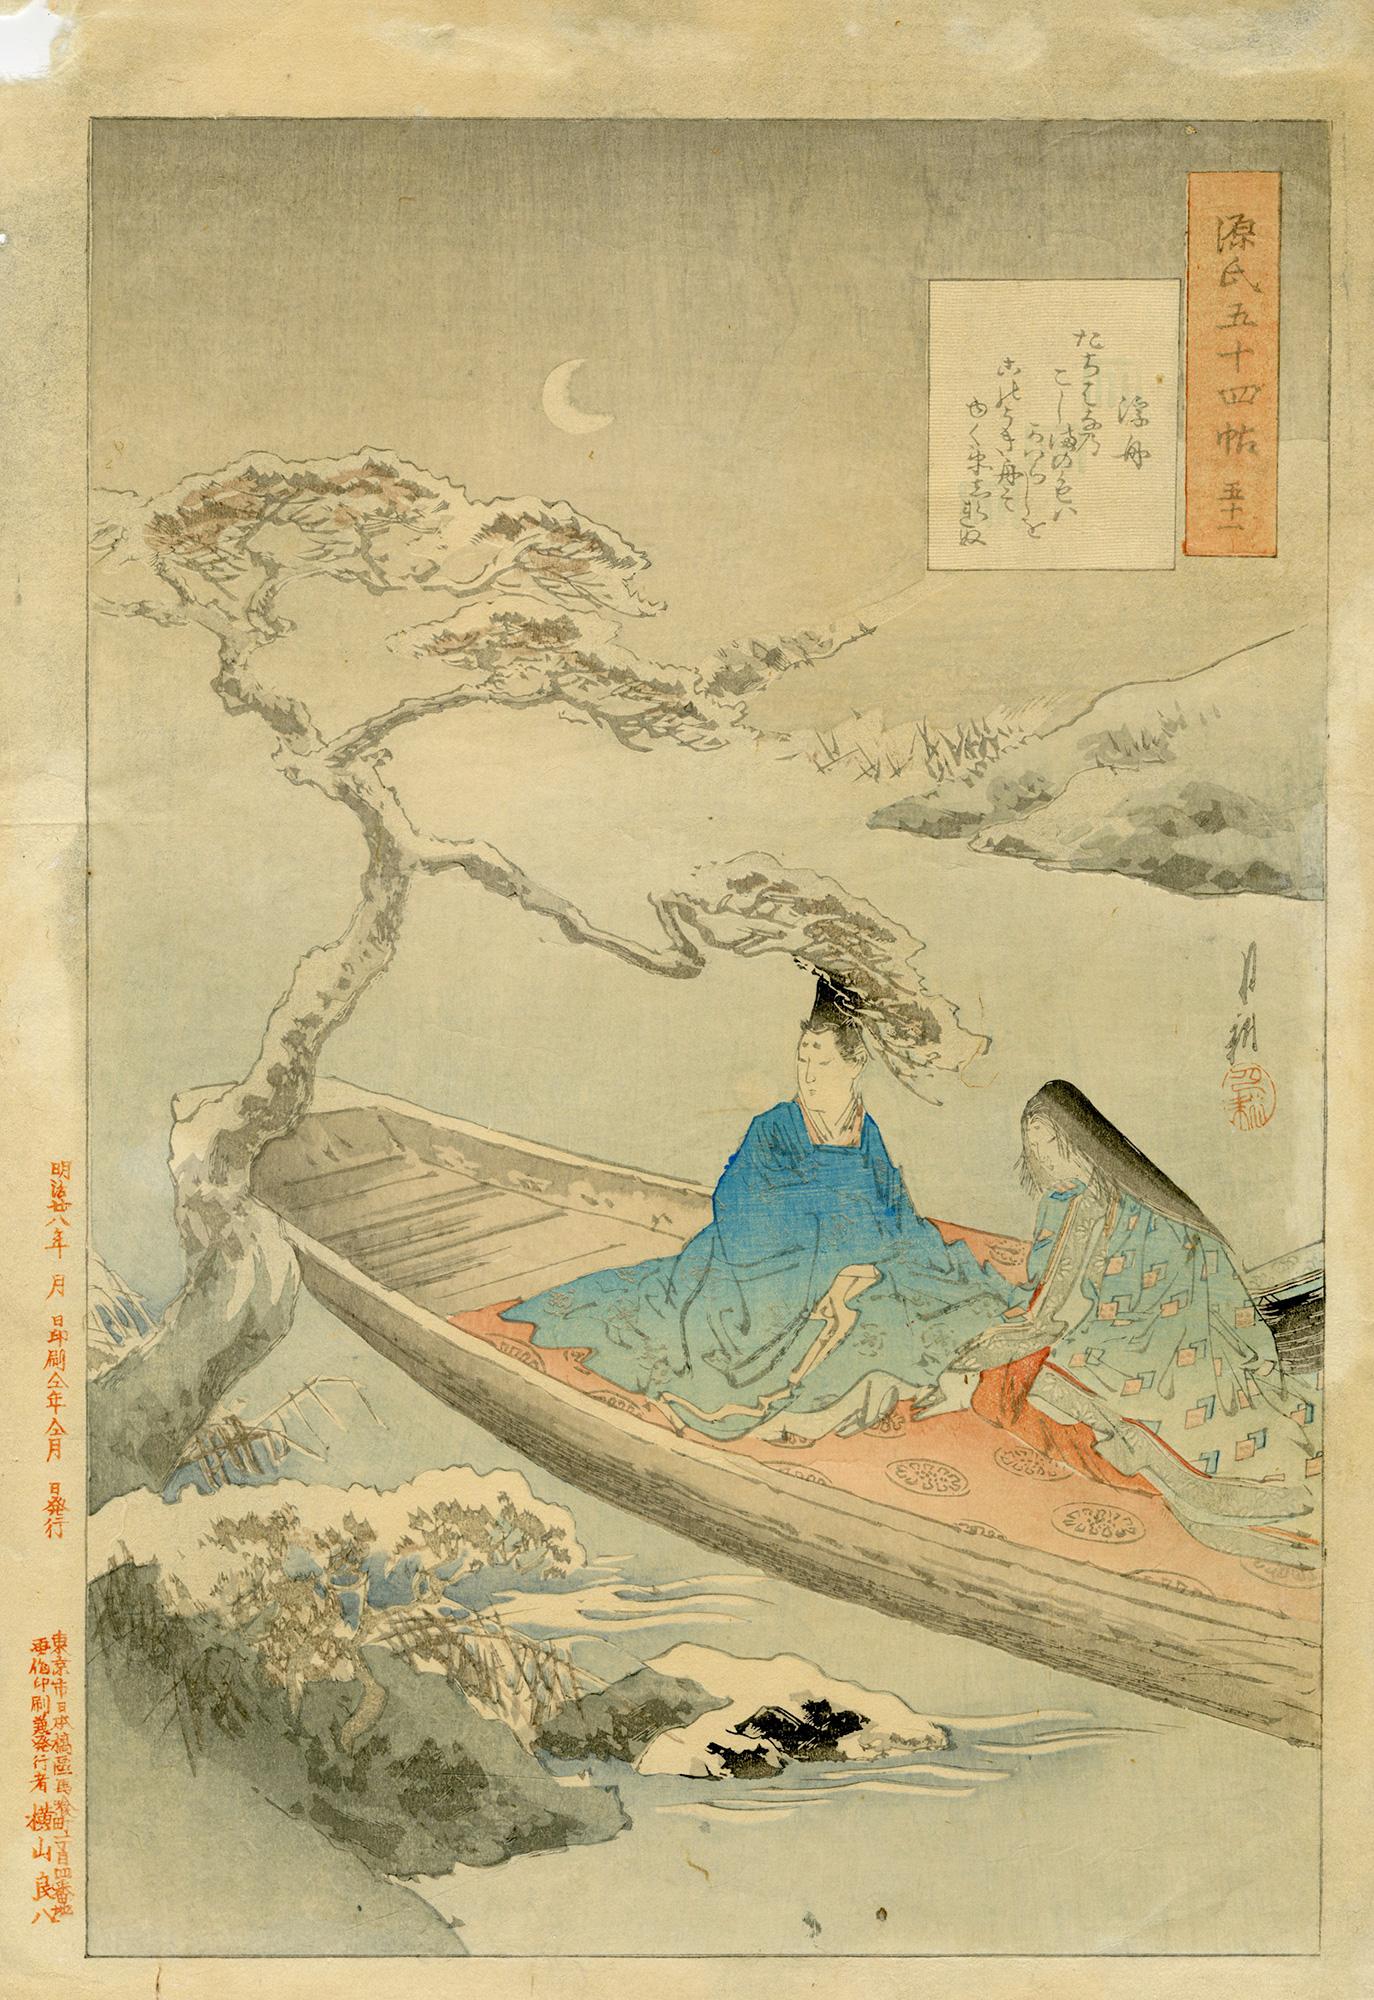 Ogata Gekko Landscape Print - Courtiers under a wisteria draped pine tree